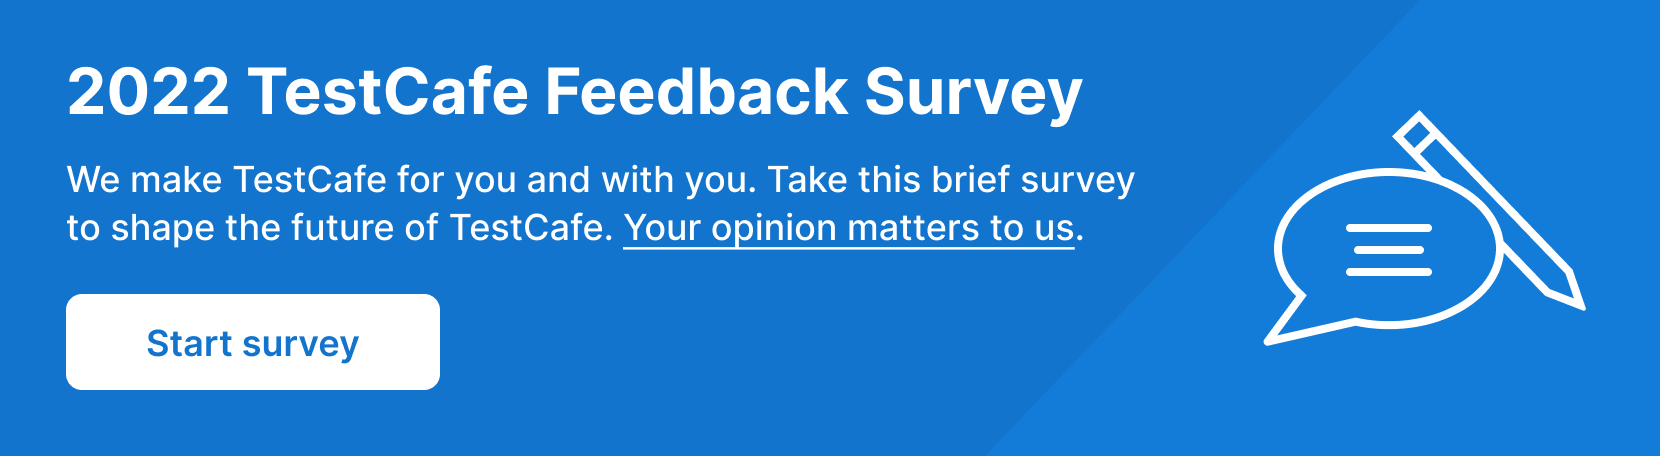 2022 TestCafe Feedback Survey